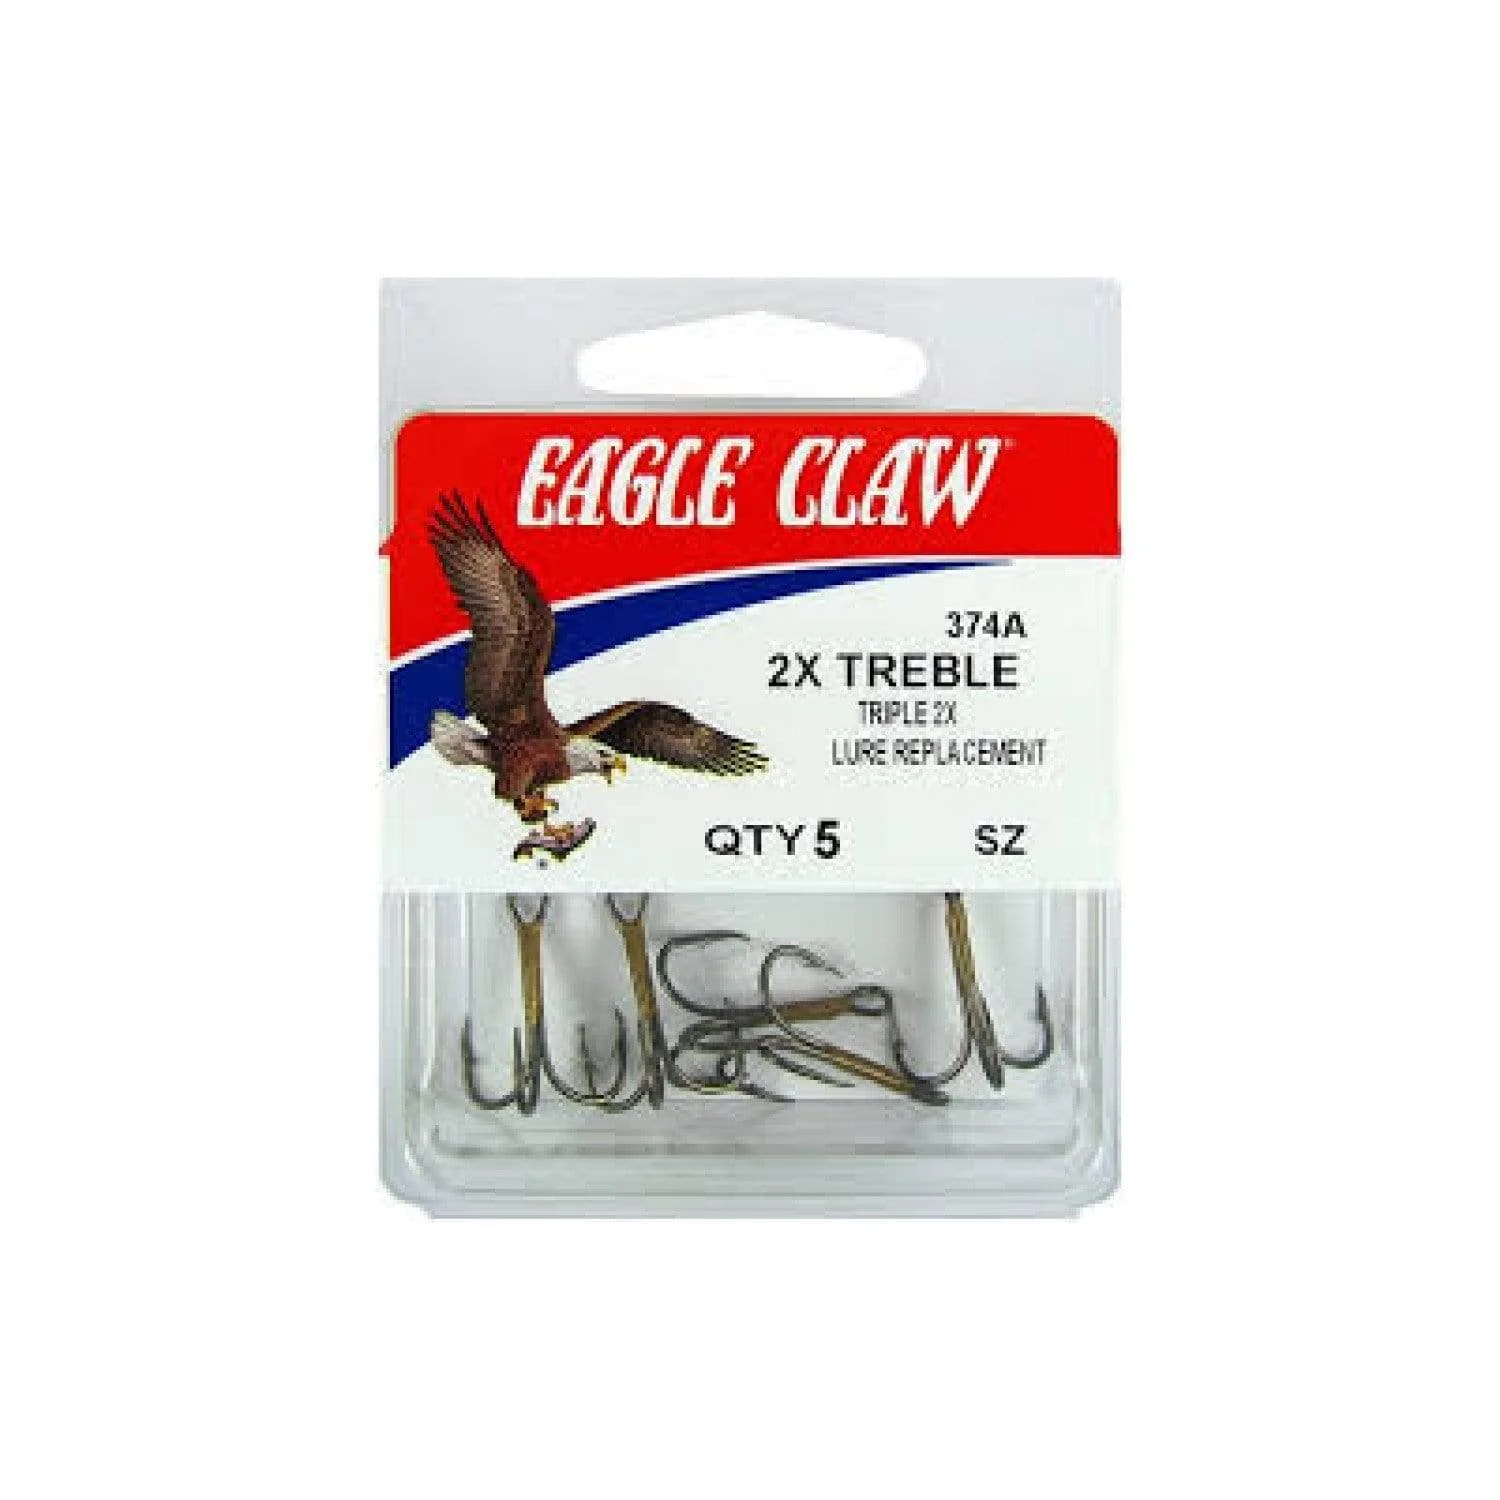 Eagle Claw 2x Treble Hook - Mel's Outdoors